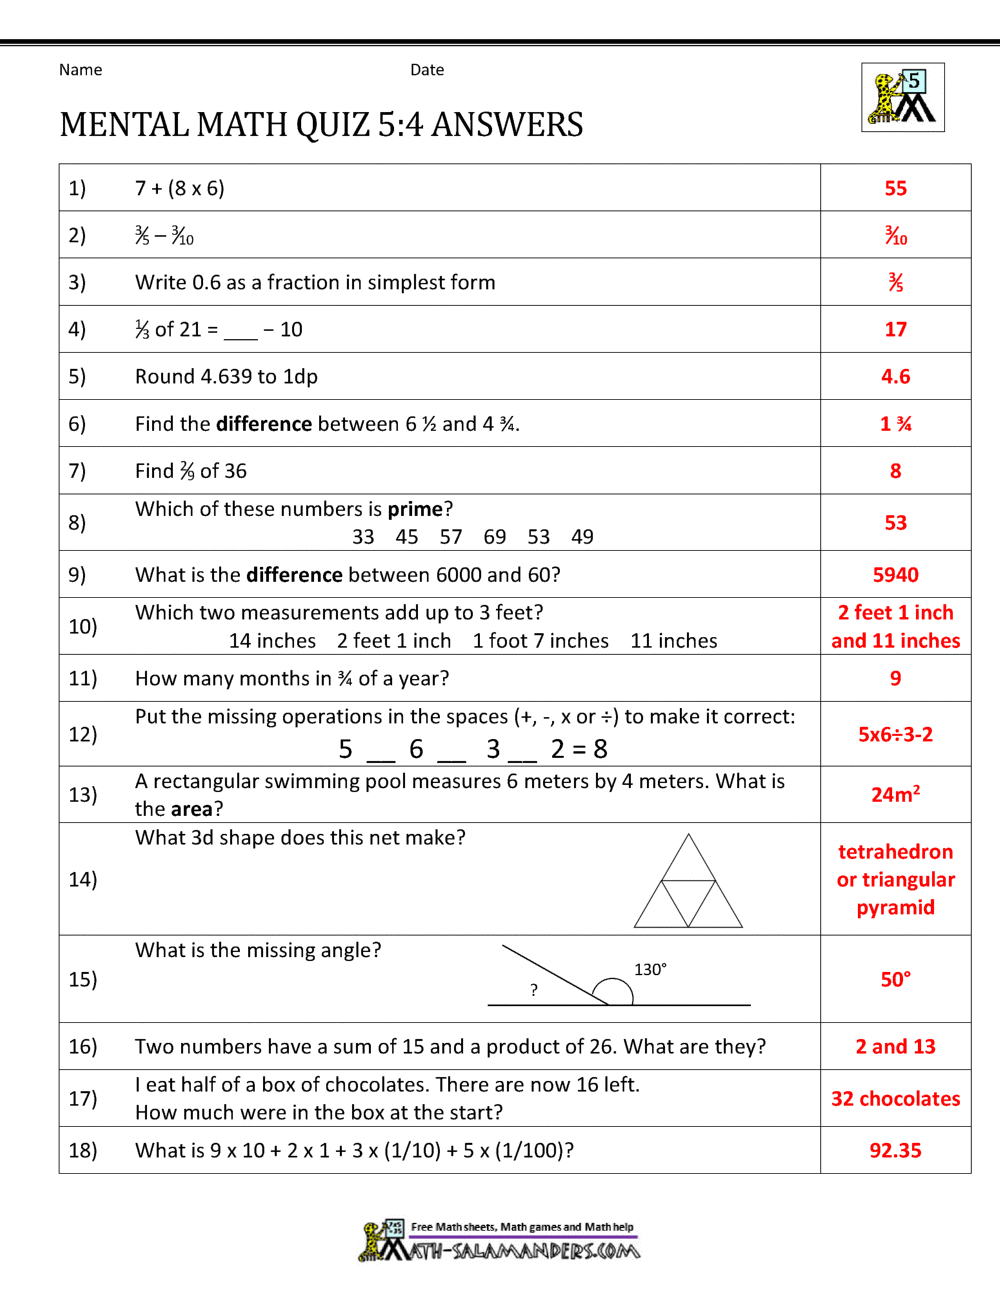 cambridge math worksheets for grade 5 pdf